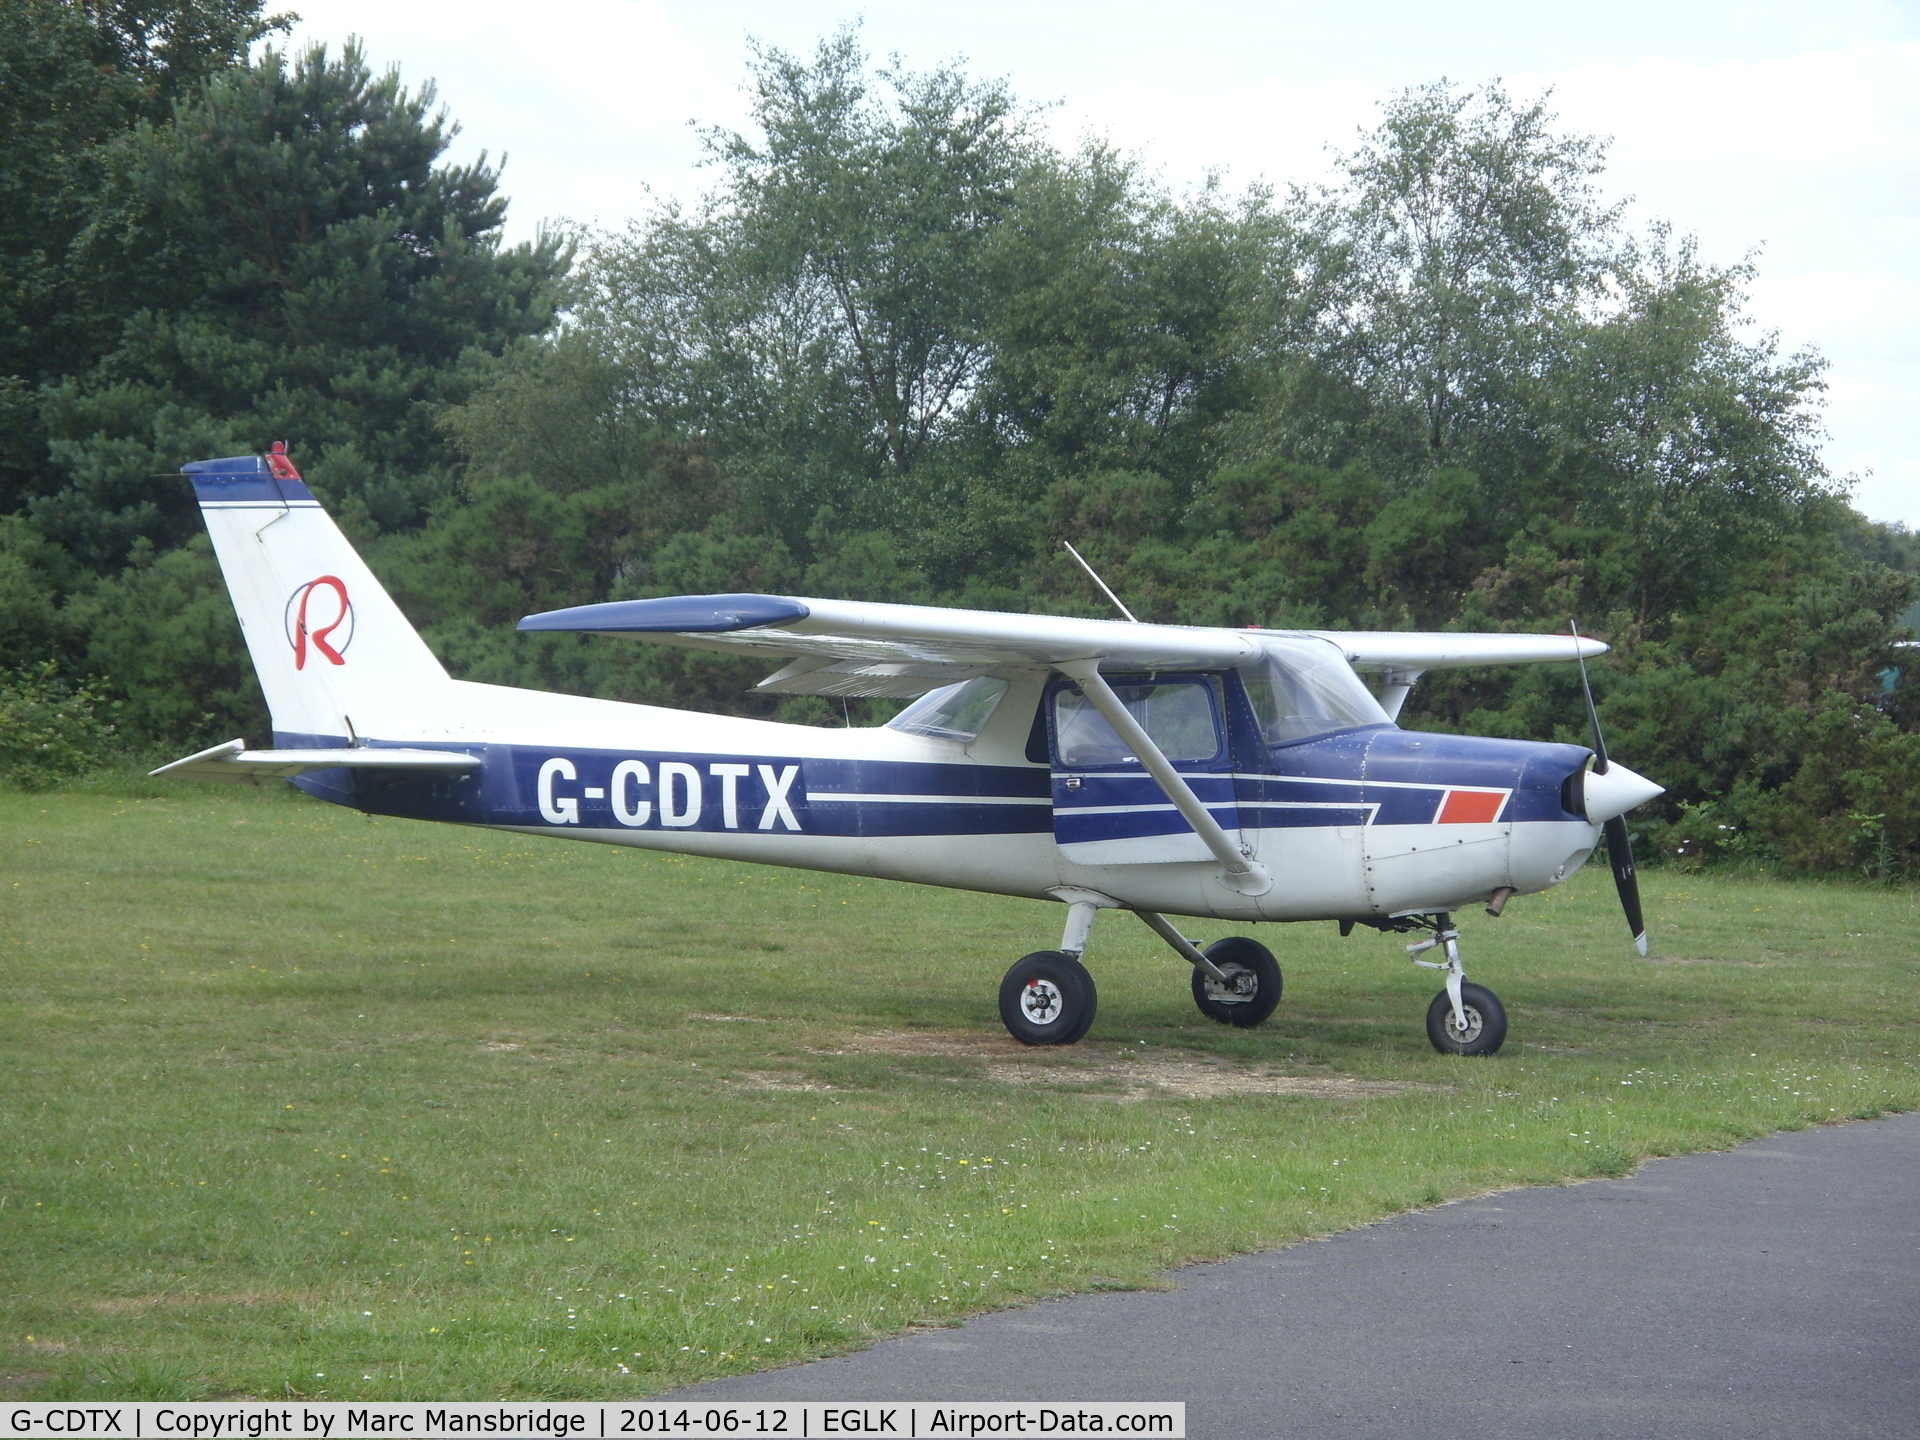 G-CDTX, 1979 Reims F152 C/N 1662, Parked at Blackbushe airfield EGLK